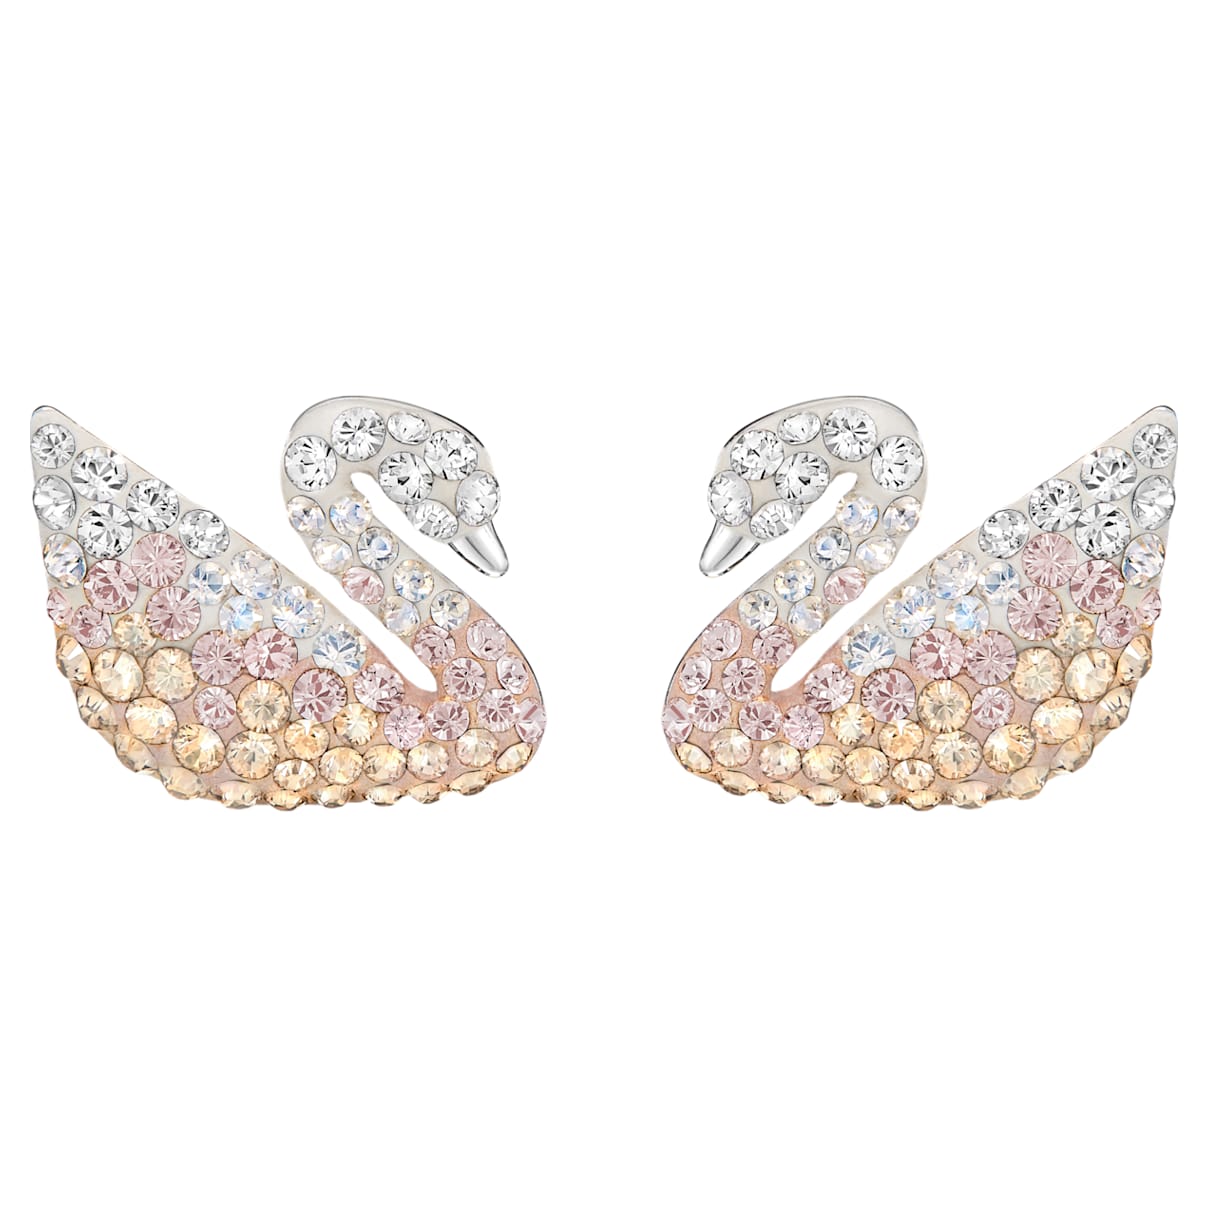 Swarovski Iconic Swan Pierced Earrings, Multi-colored, Rhodium plated